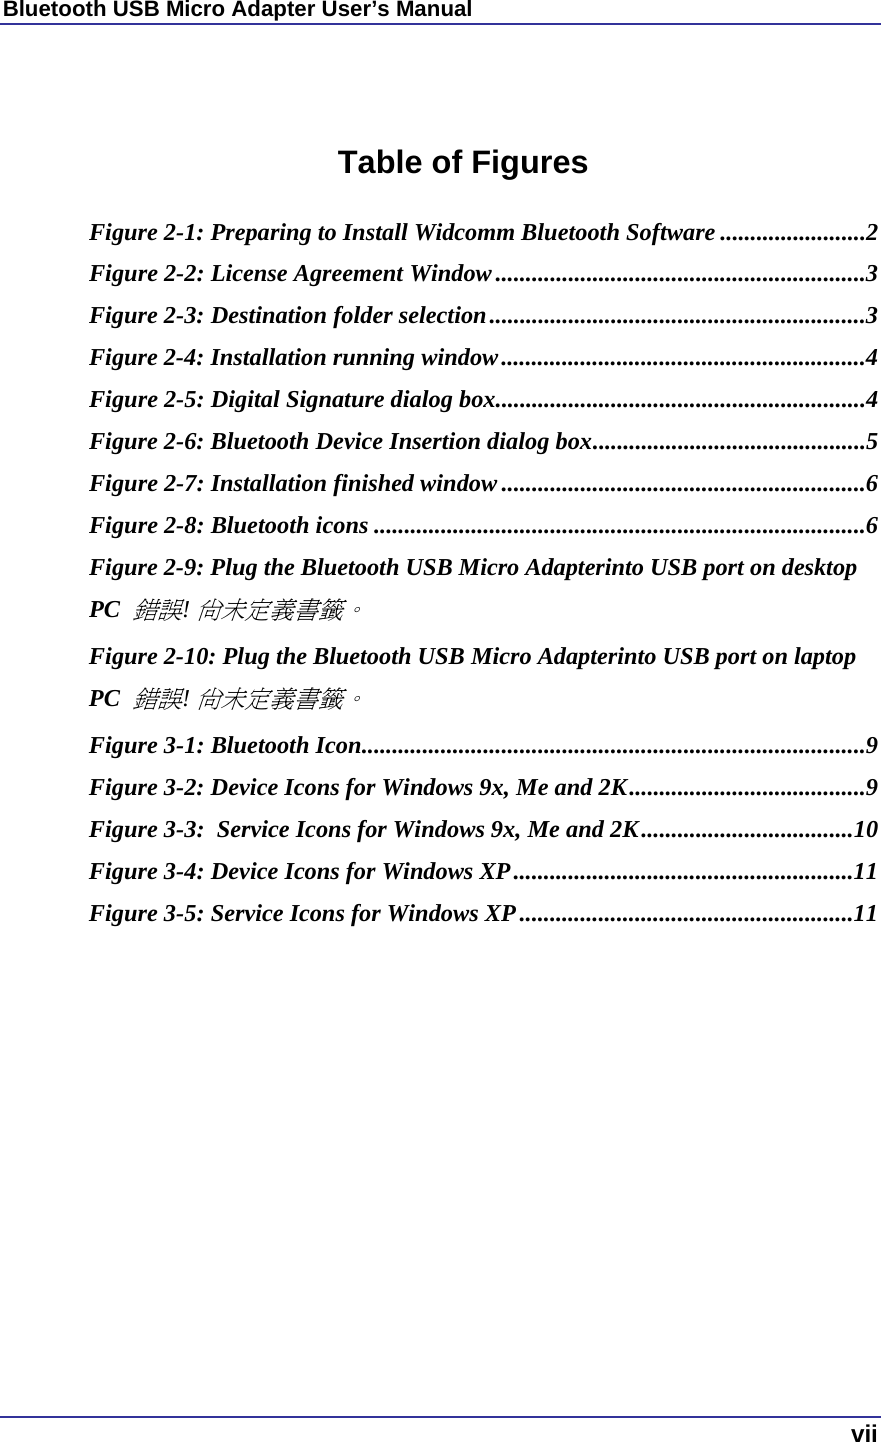 Bluetooth USB Micro Adapter User’s Manual  vii   Table of Figures  Figure 2-1: Preparing to Install Widcomm Bluetooth Software ........................2 Figure 2-2: License Agreement Window.............................................................3 Figure 2-3: Destination folder selection..............................................................3 Figure 2-4: Installation running window............................................................4 Figure 2-5: Digital Signature dialog box.............................................................4 Figure 2-6: Bluetooth Device Insertion dialog box.............................................5 Figure 2-7: Installation finished window ............................................................6 Figure 2-8: Bluetooth icons .................................................................................6 Figure 2-9: Plug the Bluetooth USB Micro Adapterinto USB port on desktop PC 錯誤! 尚未定義書籤。 Figure 2-10: Plug the Bluetooth USB Micro Adapterinto USB port on laptop PC 錯誤! 尚未定義書籤。 Figure 3-1: Bluetooth Icon...................................................................................9 Figure 3-2: Device Icons for Windows 9x, Me and 2K.......................................9 Figure 3-3:  Service Icons for Windows 9x, Me and 2K...................................10 Figure 3-4: Device Icons for Windows XP........................................................11 Figure 3-5: Service Icons for Windows XP.......................................................11   